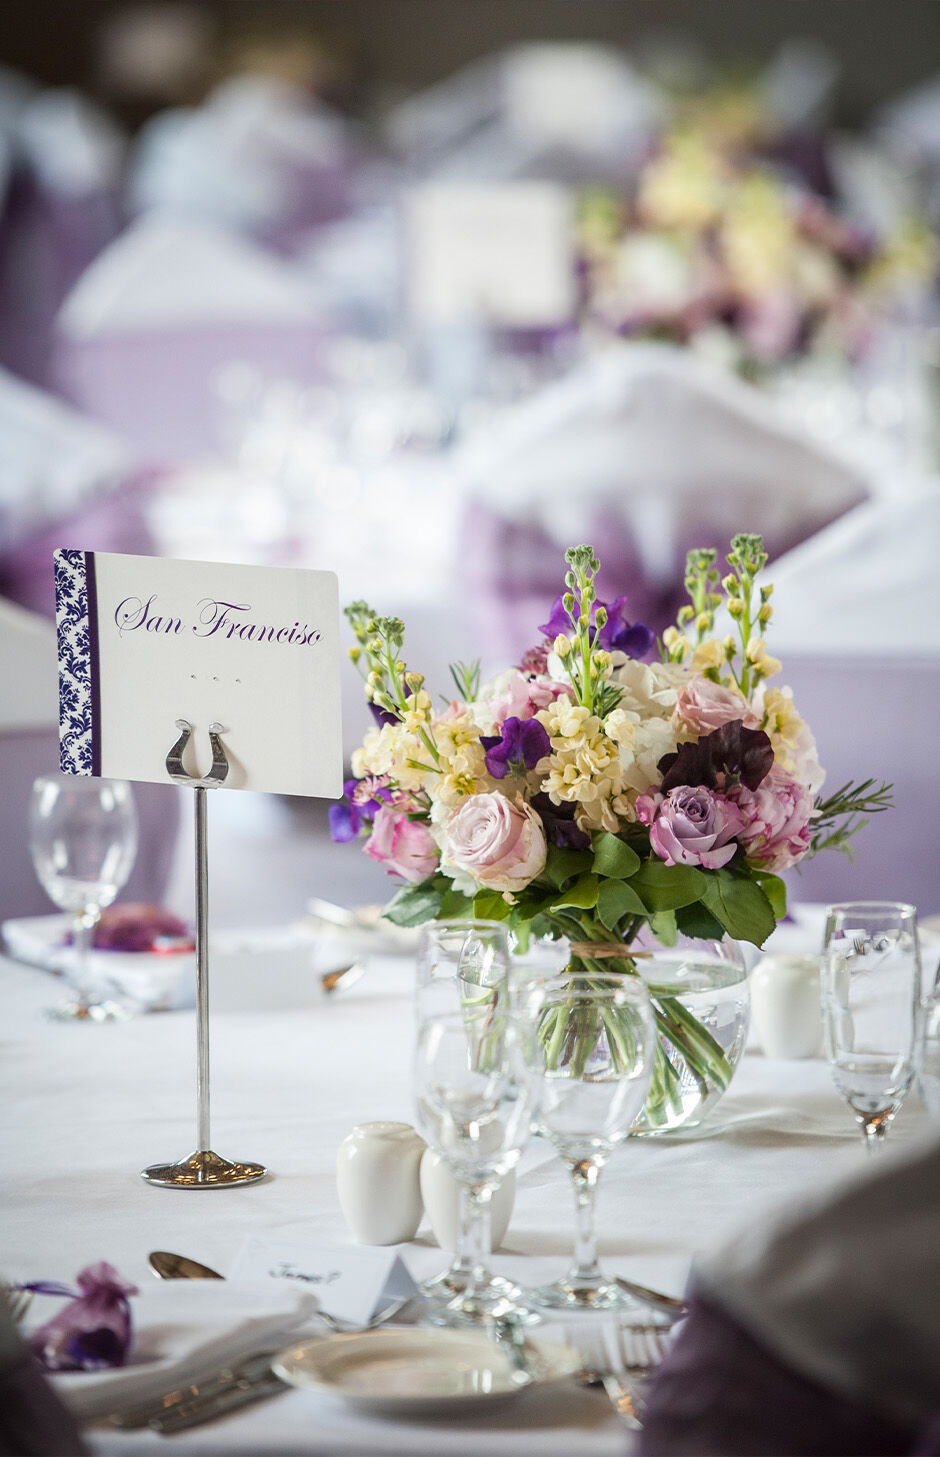 Essendon Country Club Wedding Table